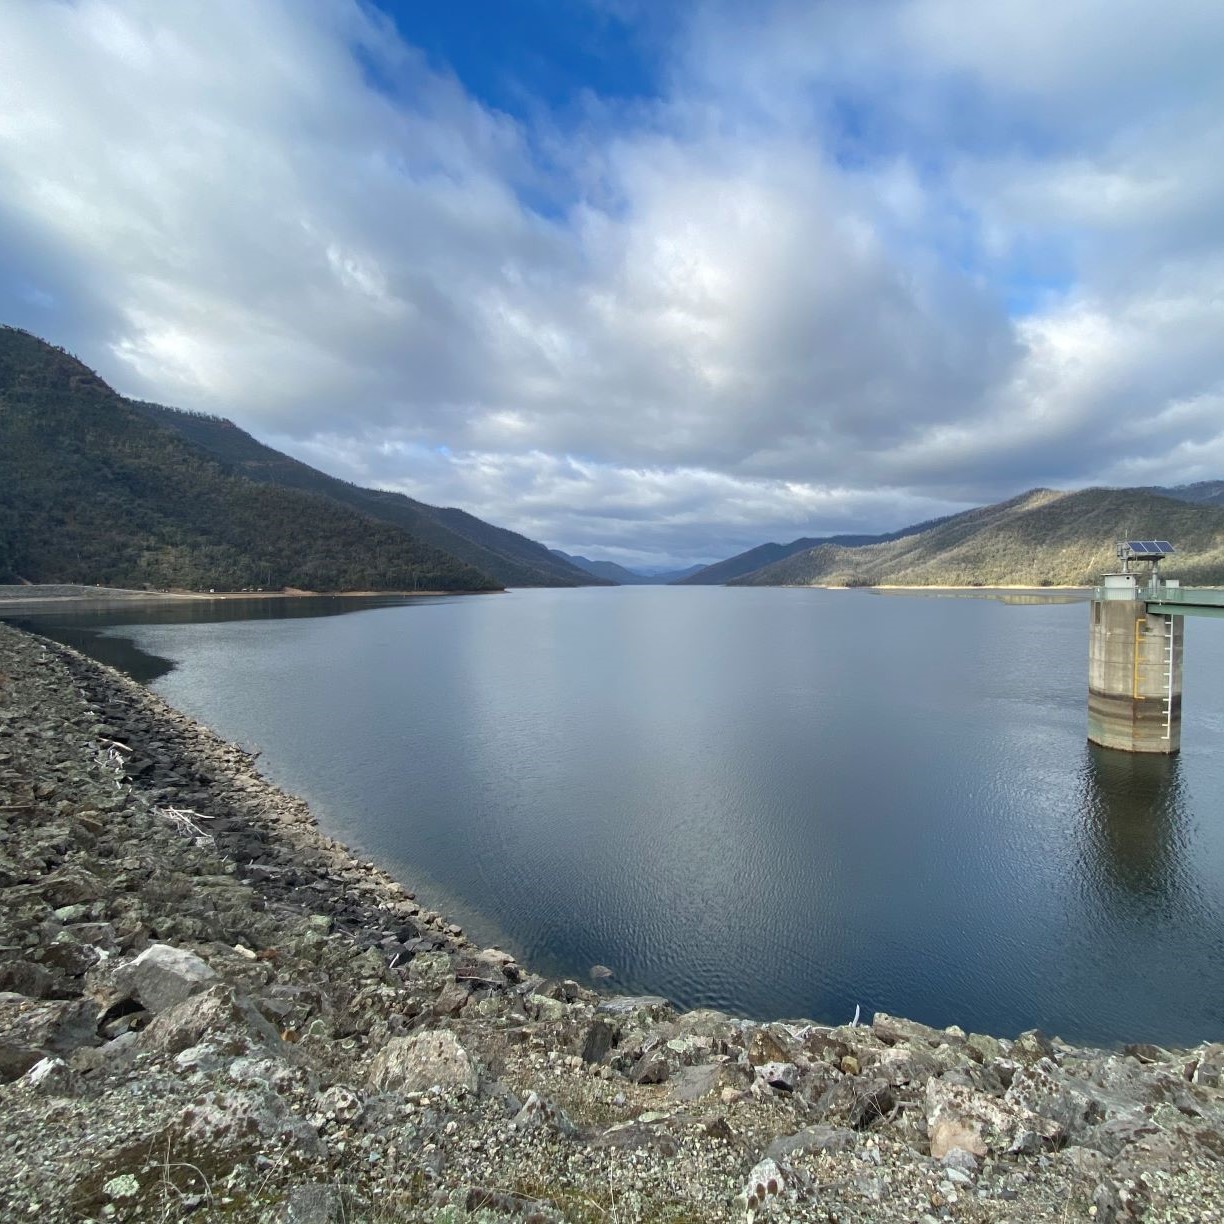 Decorative image of Talbingo Dam, New Soutgh Wales